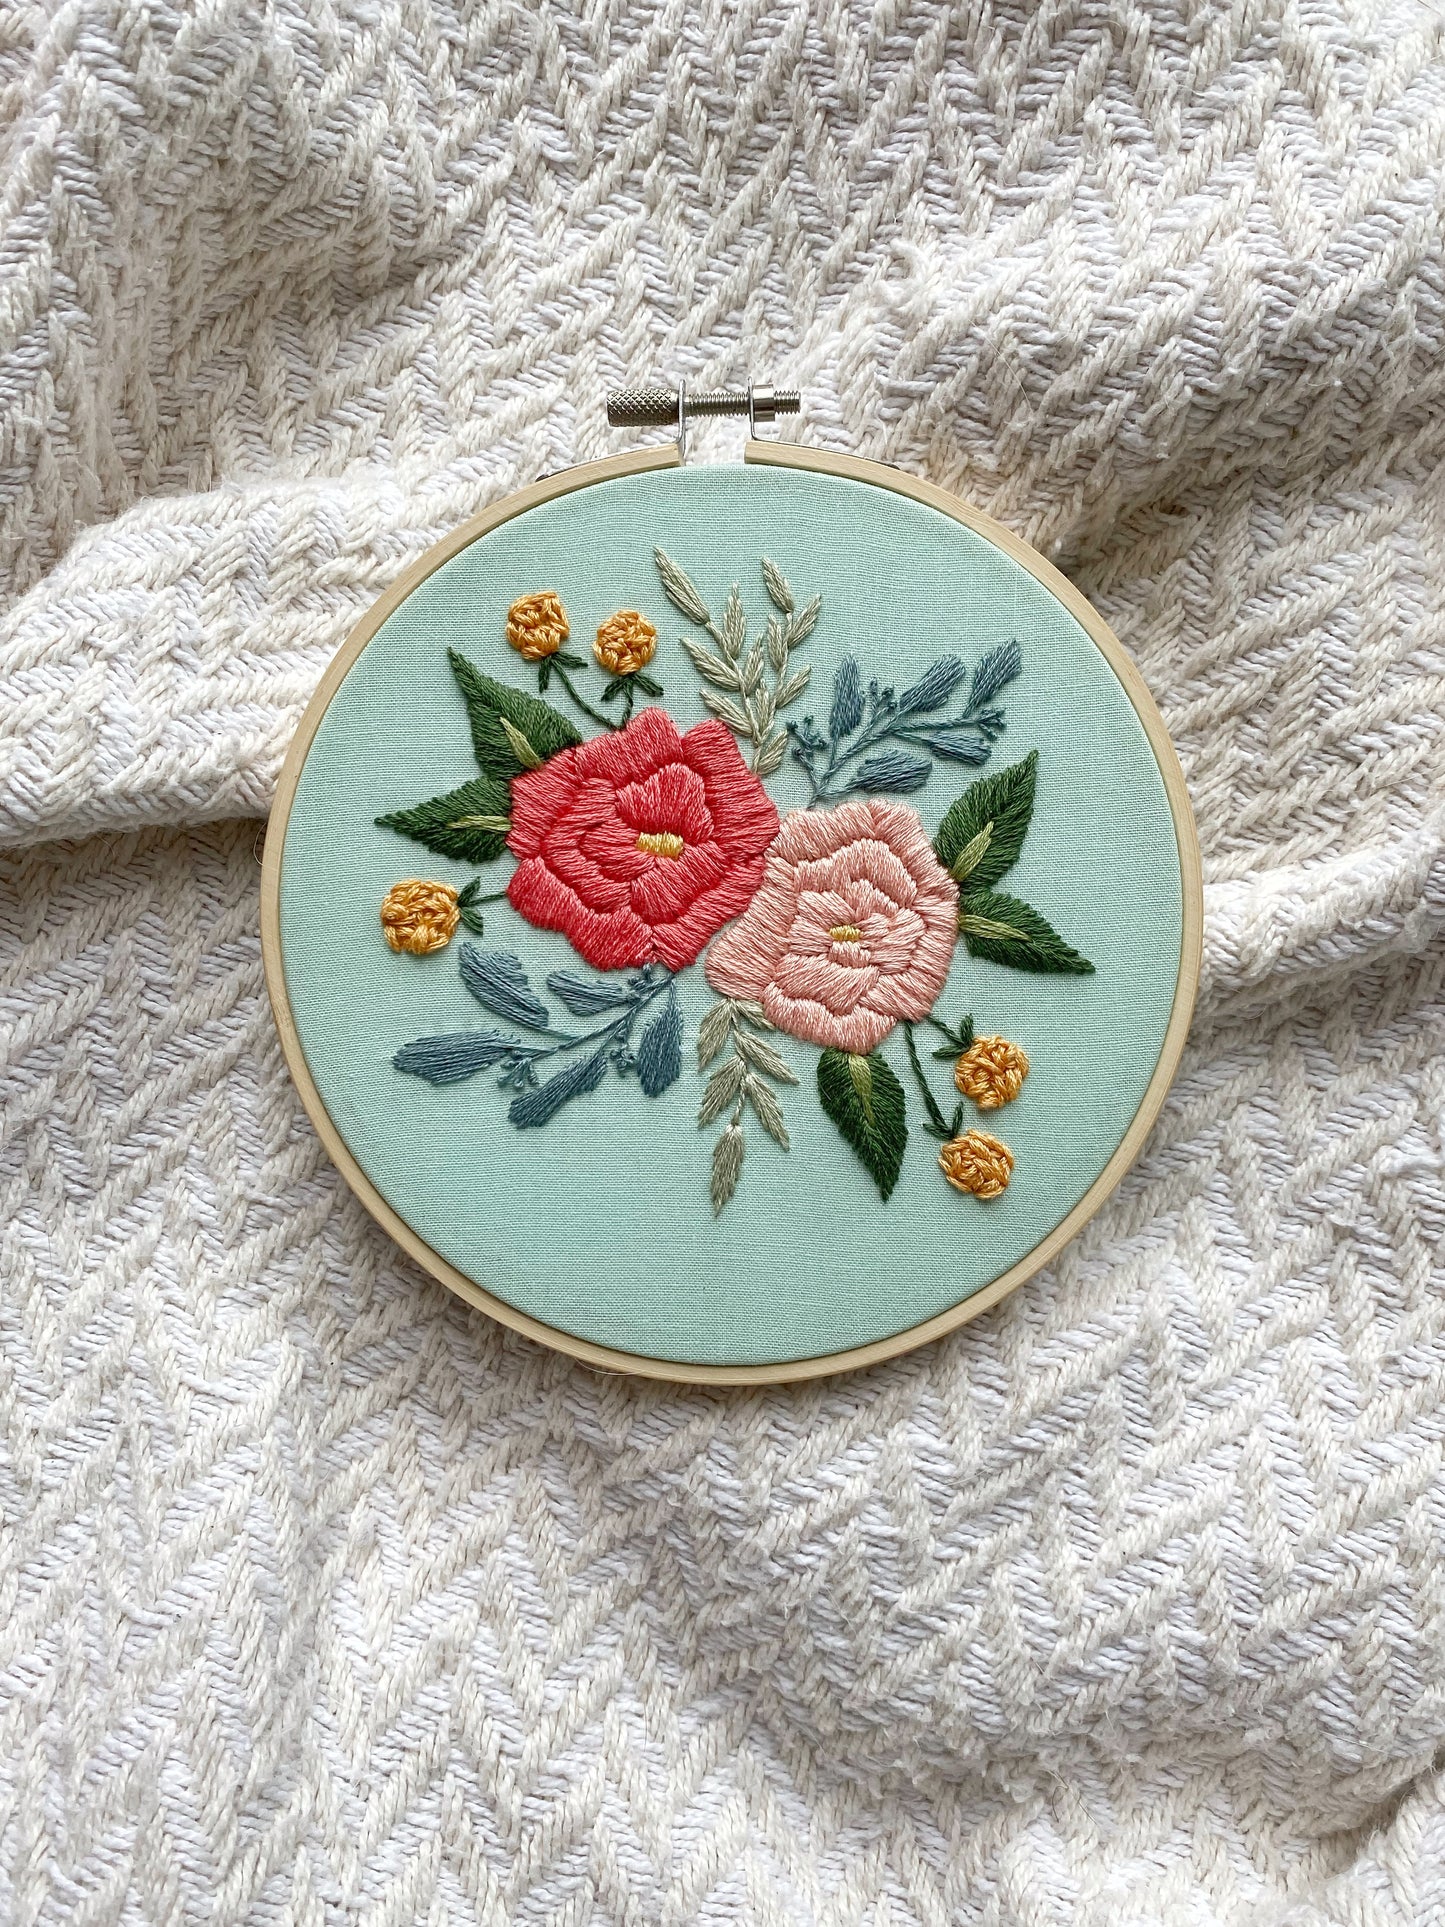 Fresh Picked Peonies || Ready-to-Ship Original 6" Embroidery Hoop Artwork